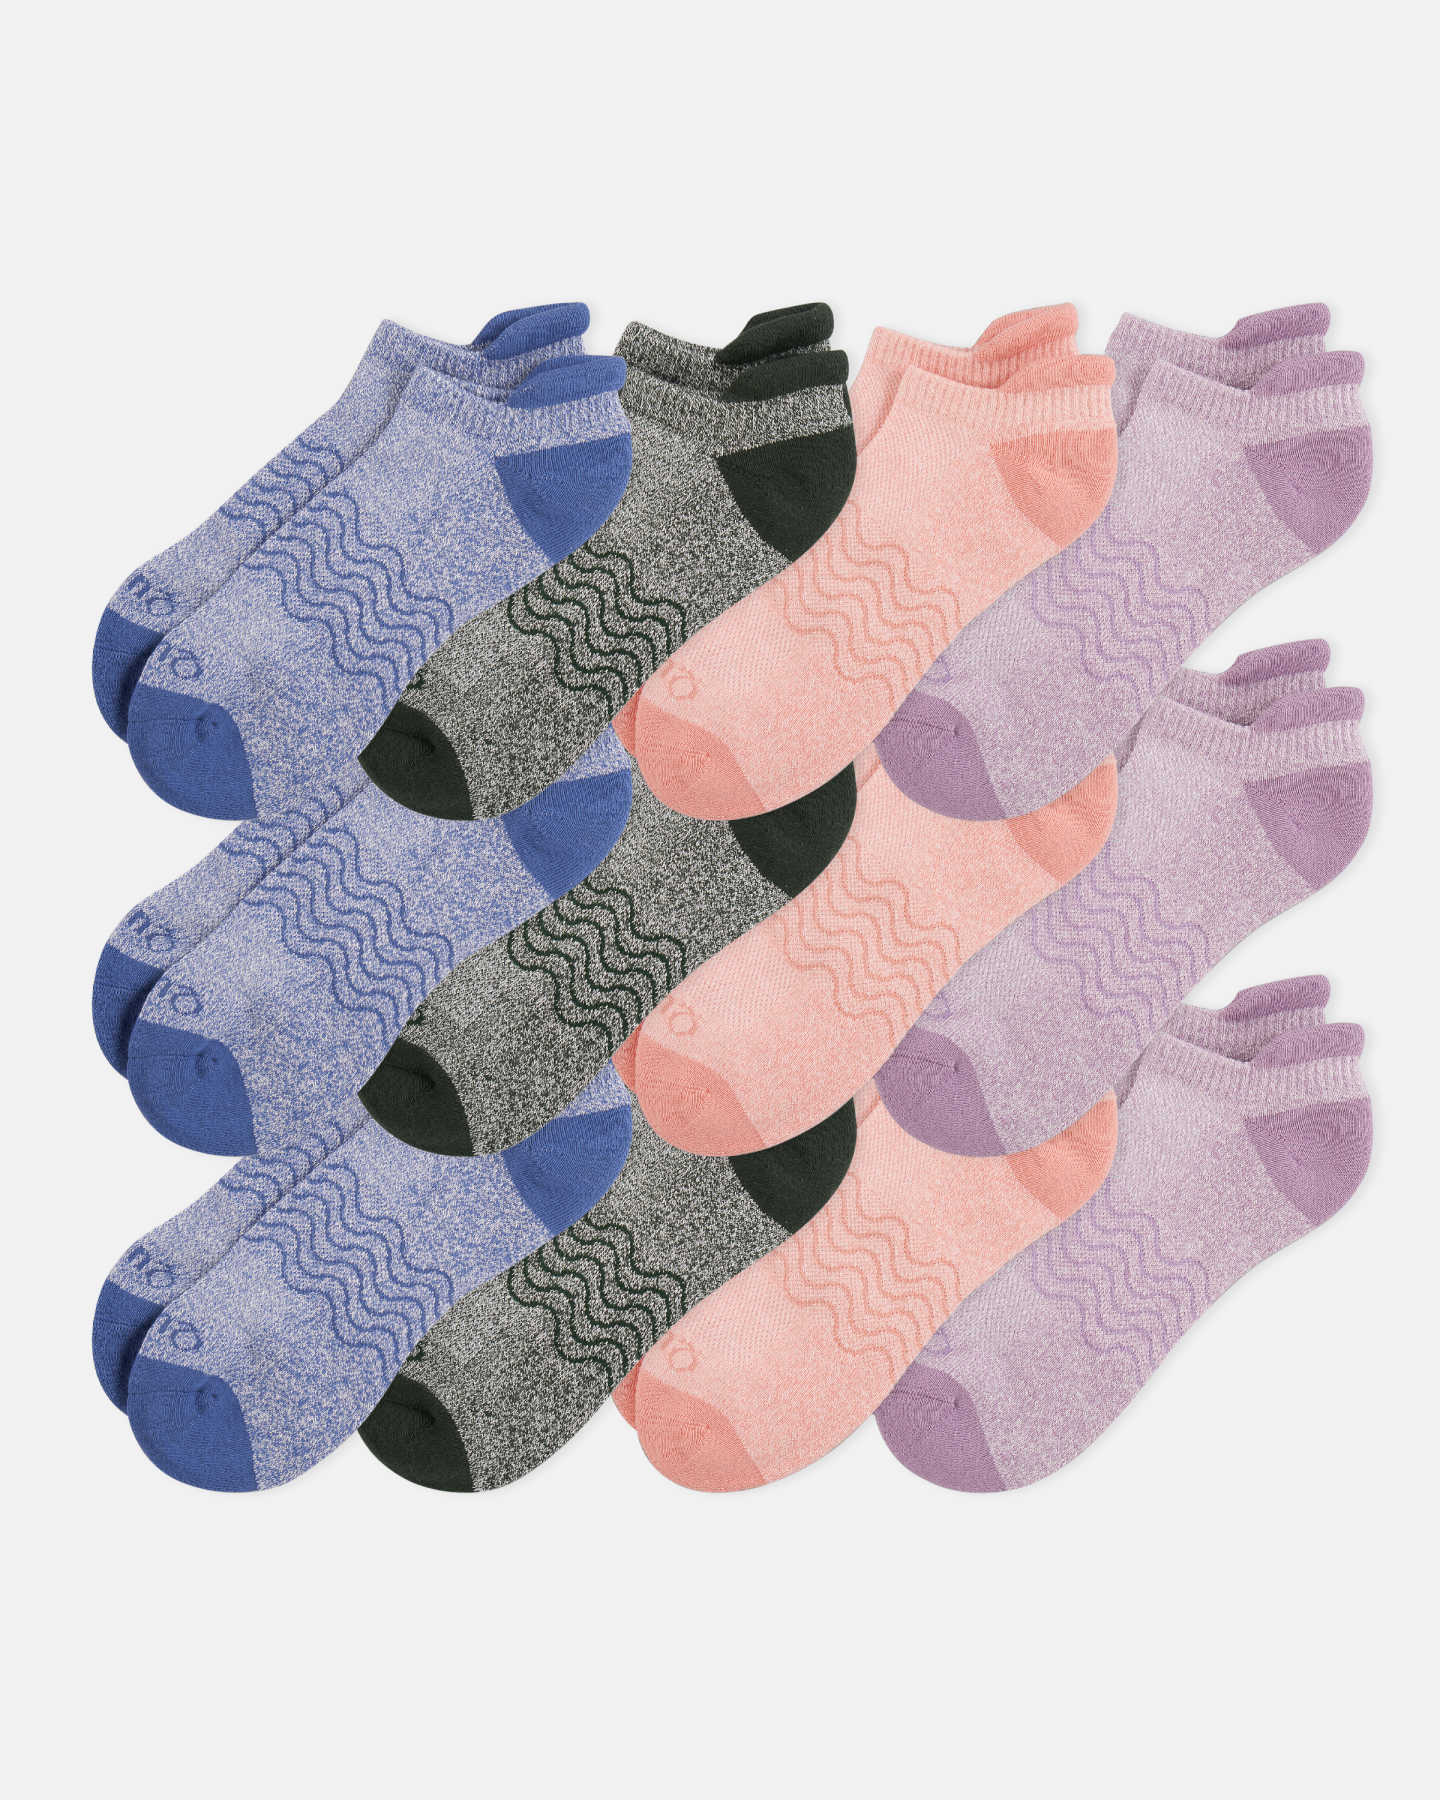 Organic Colorblock Marl Ankle Socks (12-pack) - Pink/Blue/Purple Mix